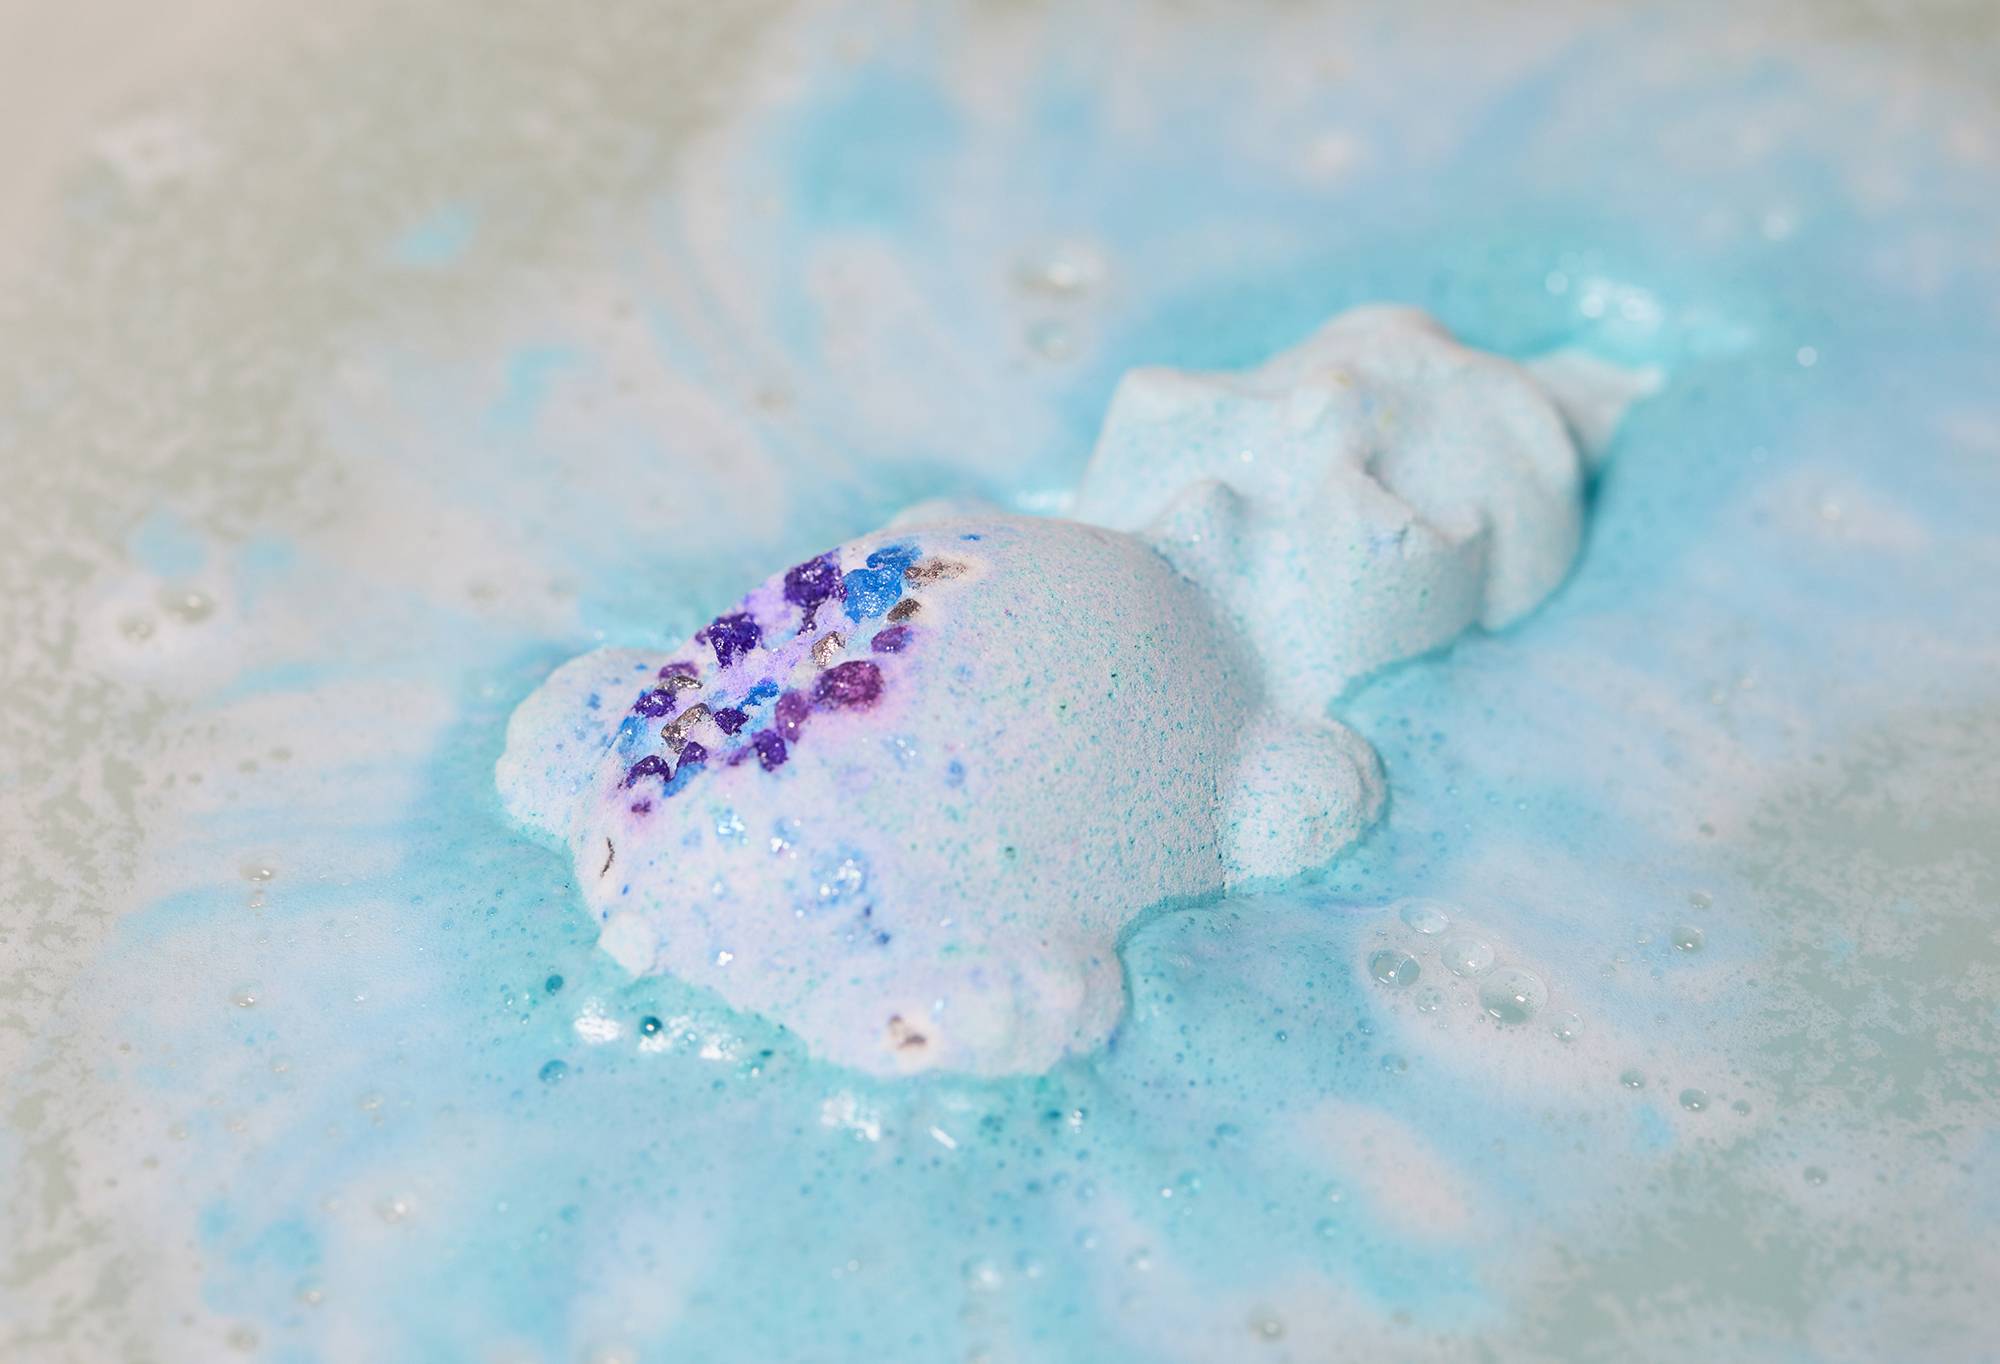 Snow Dragon bath bomb is half dissolved in the water as it gently releases pastel blue foamy swirls.